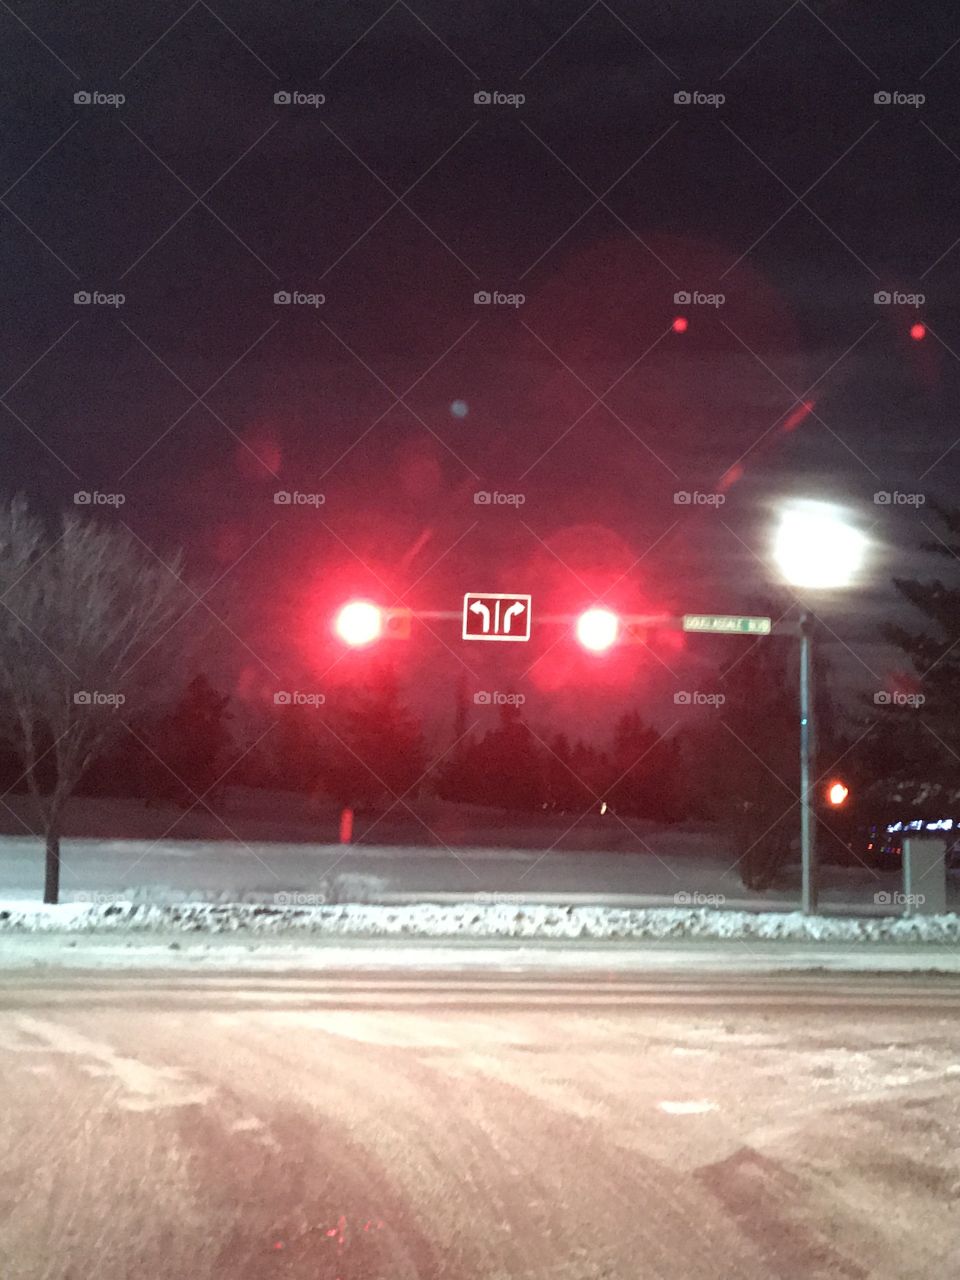 Red lights